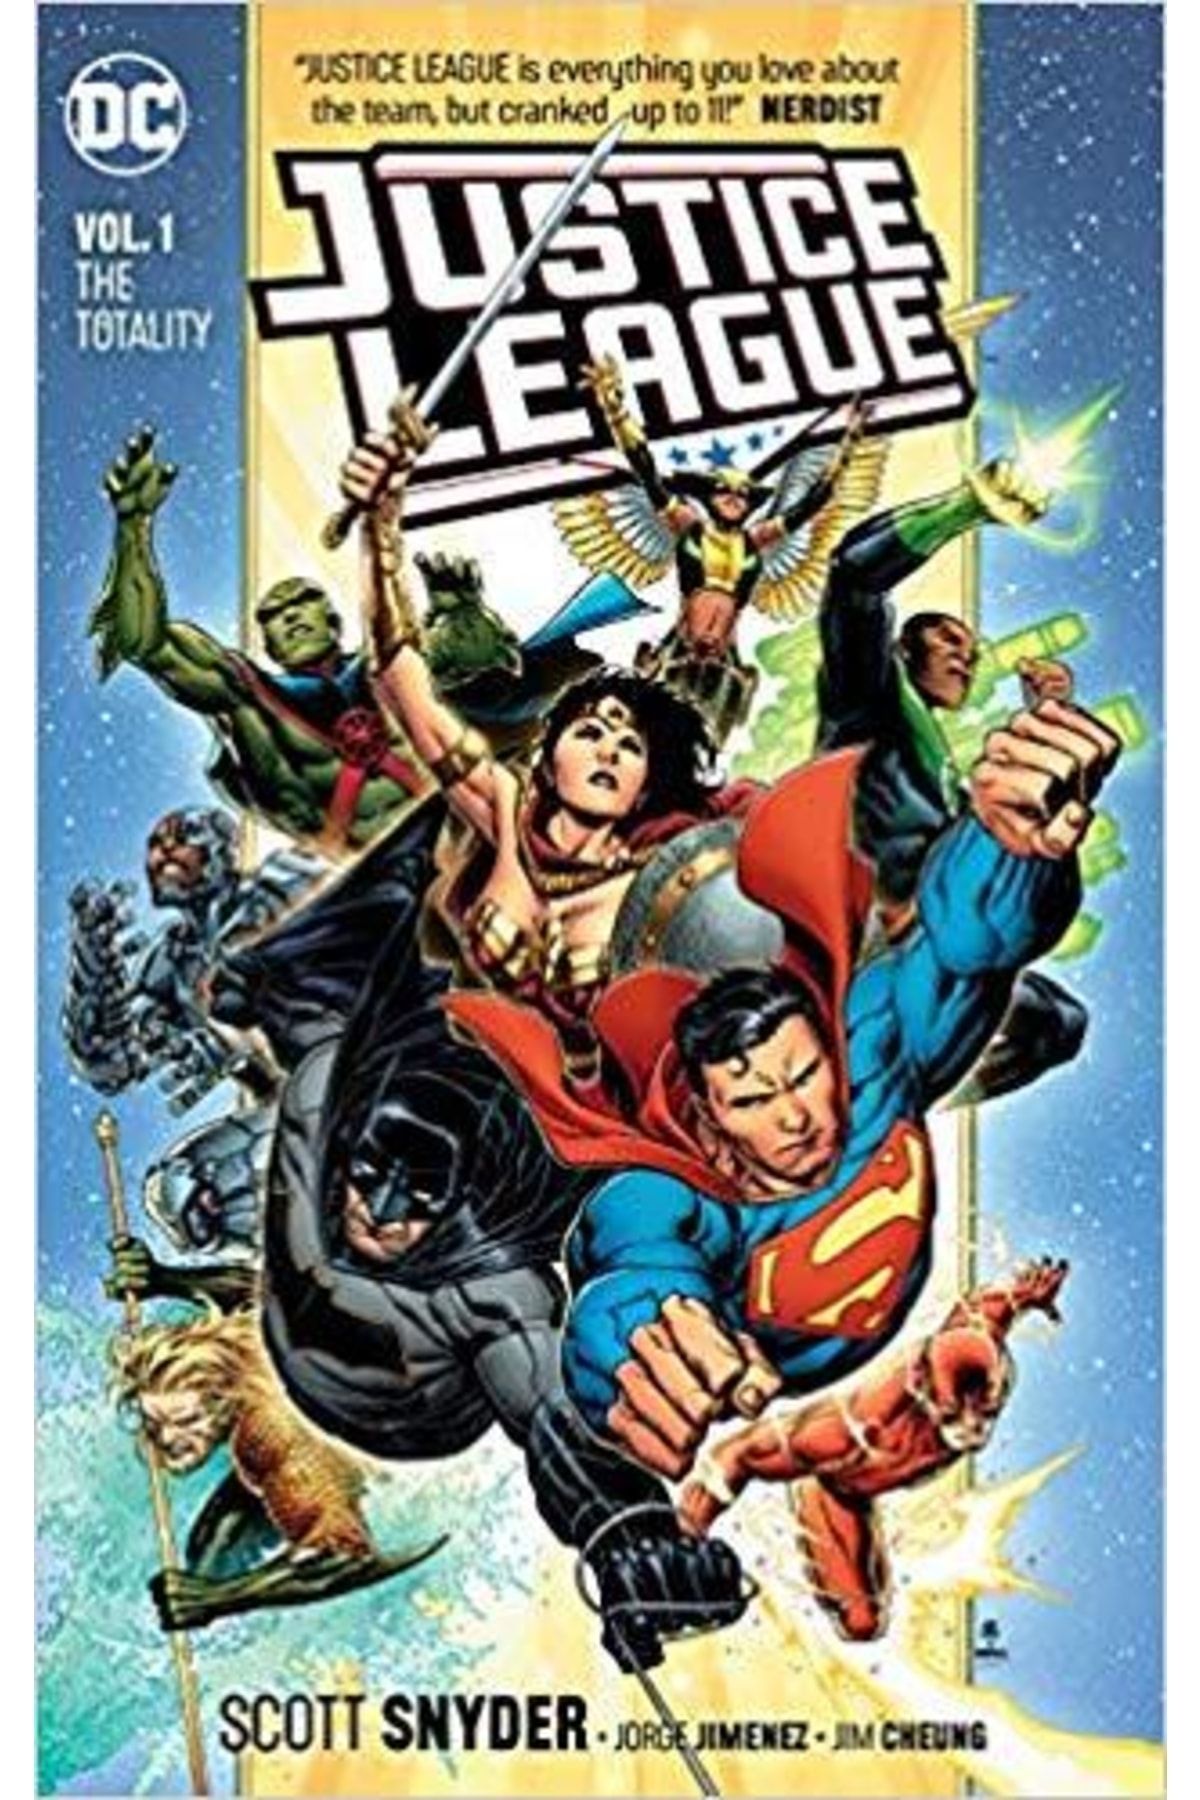 TM & DC Comics-Warner Bros Justice League Vol. 1: The Totality